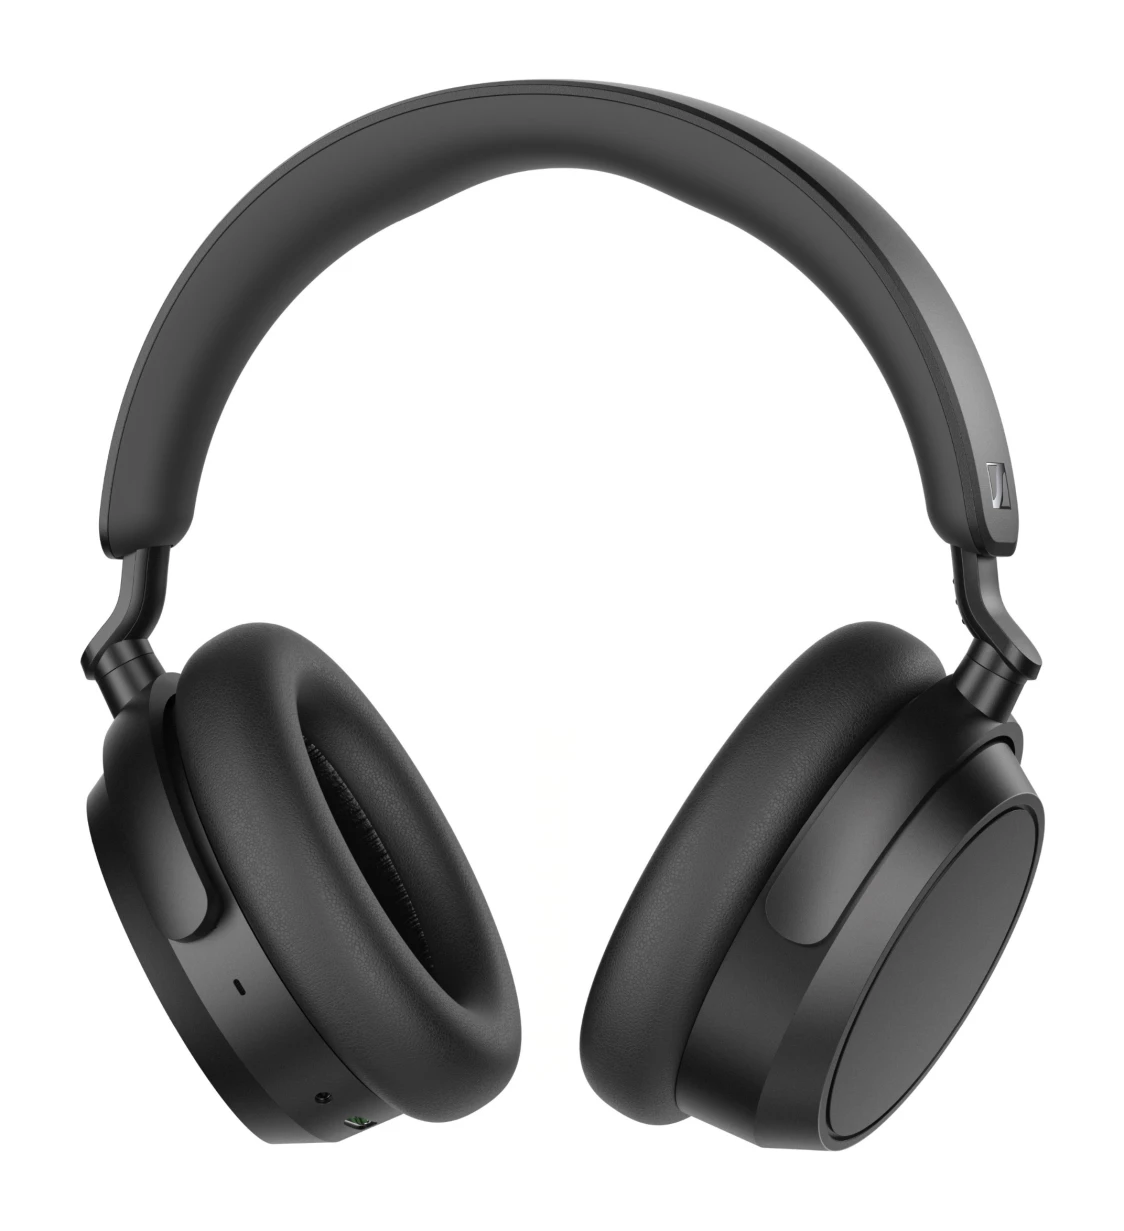 Headphones - Shop Sony, JBL, Bose, Sennheiser & More - JB Hi-Fi